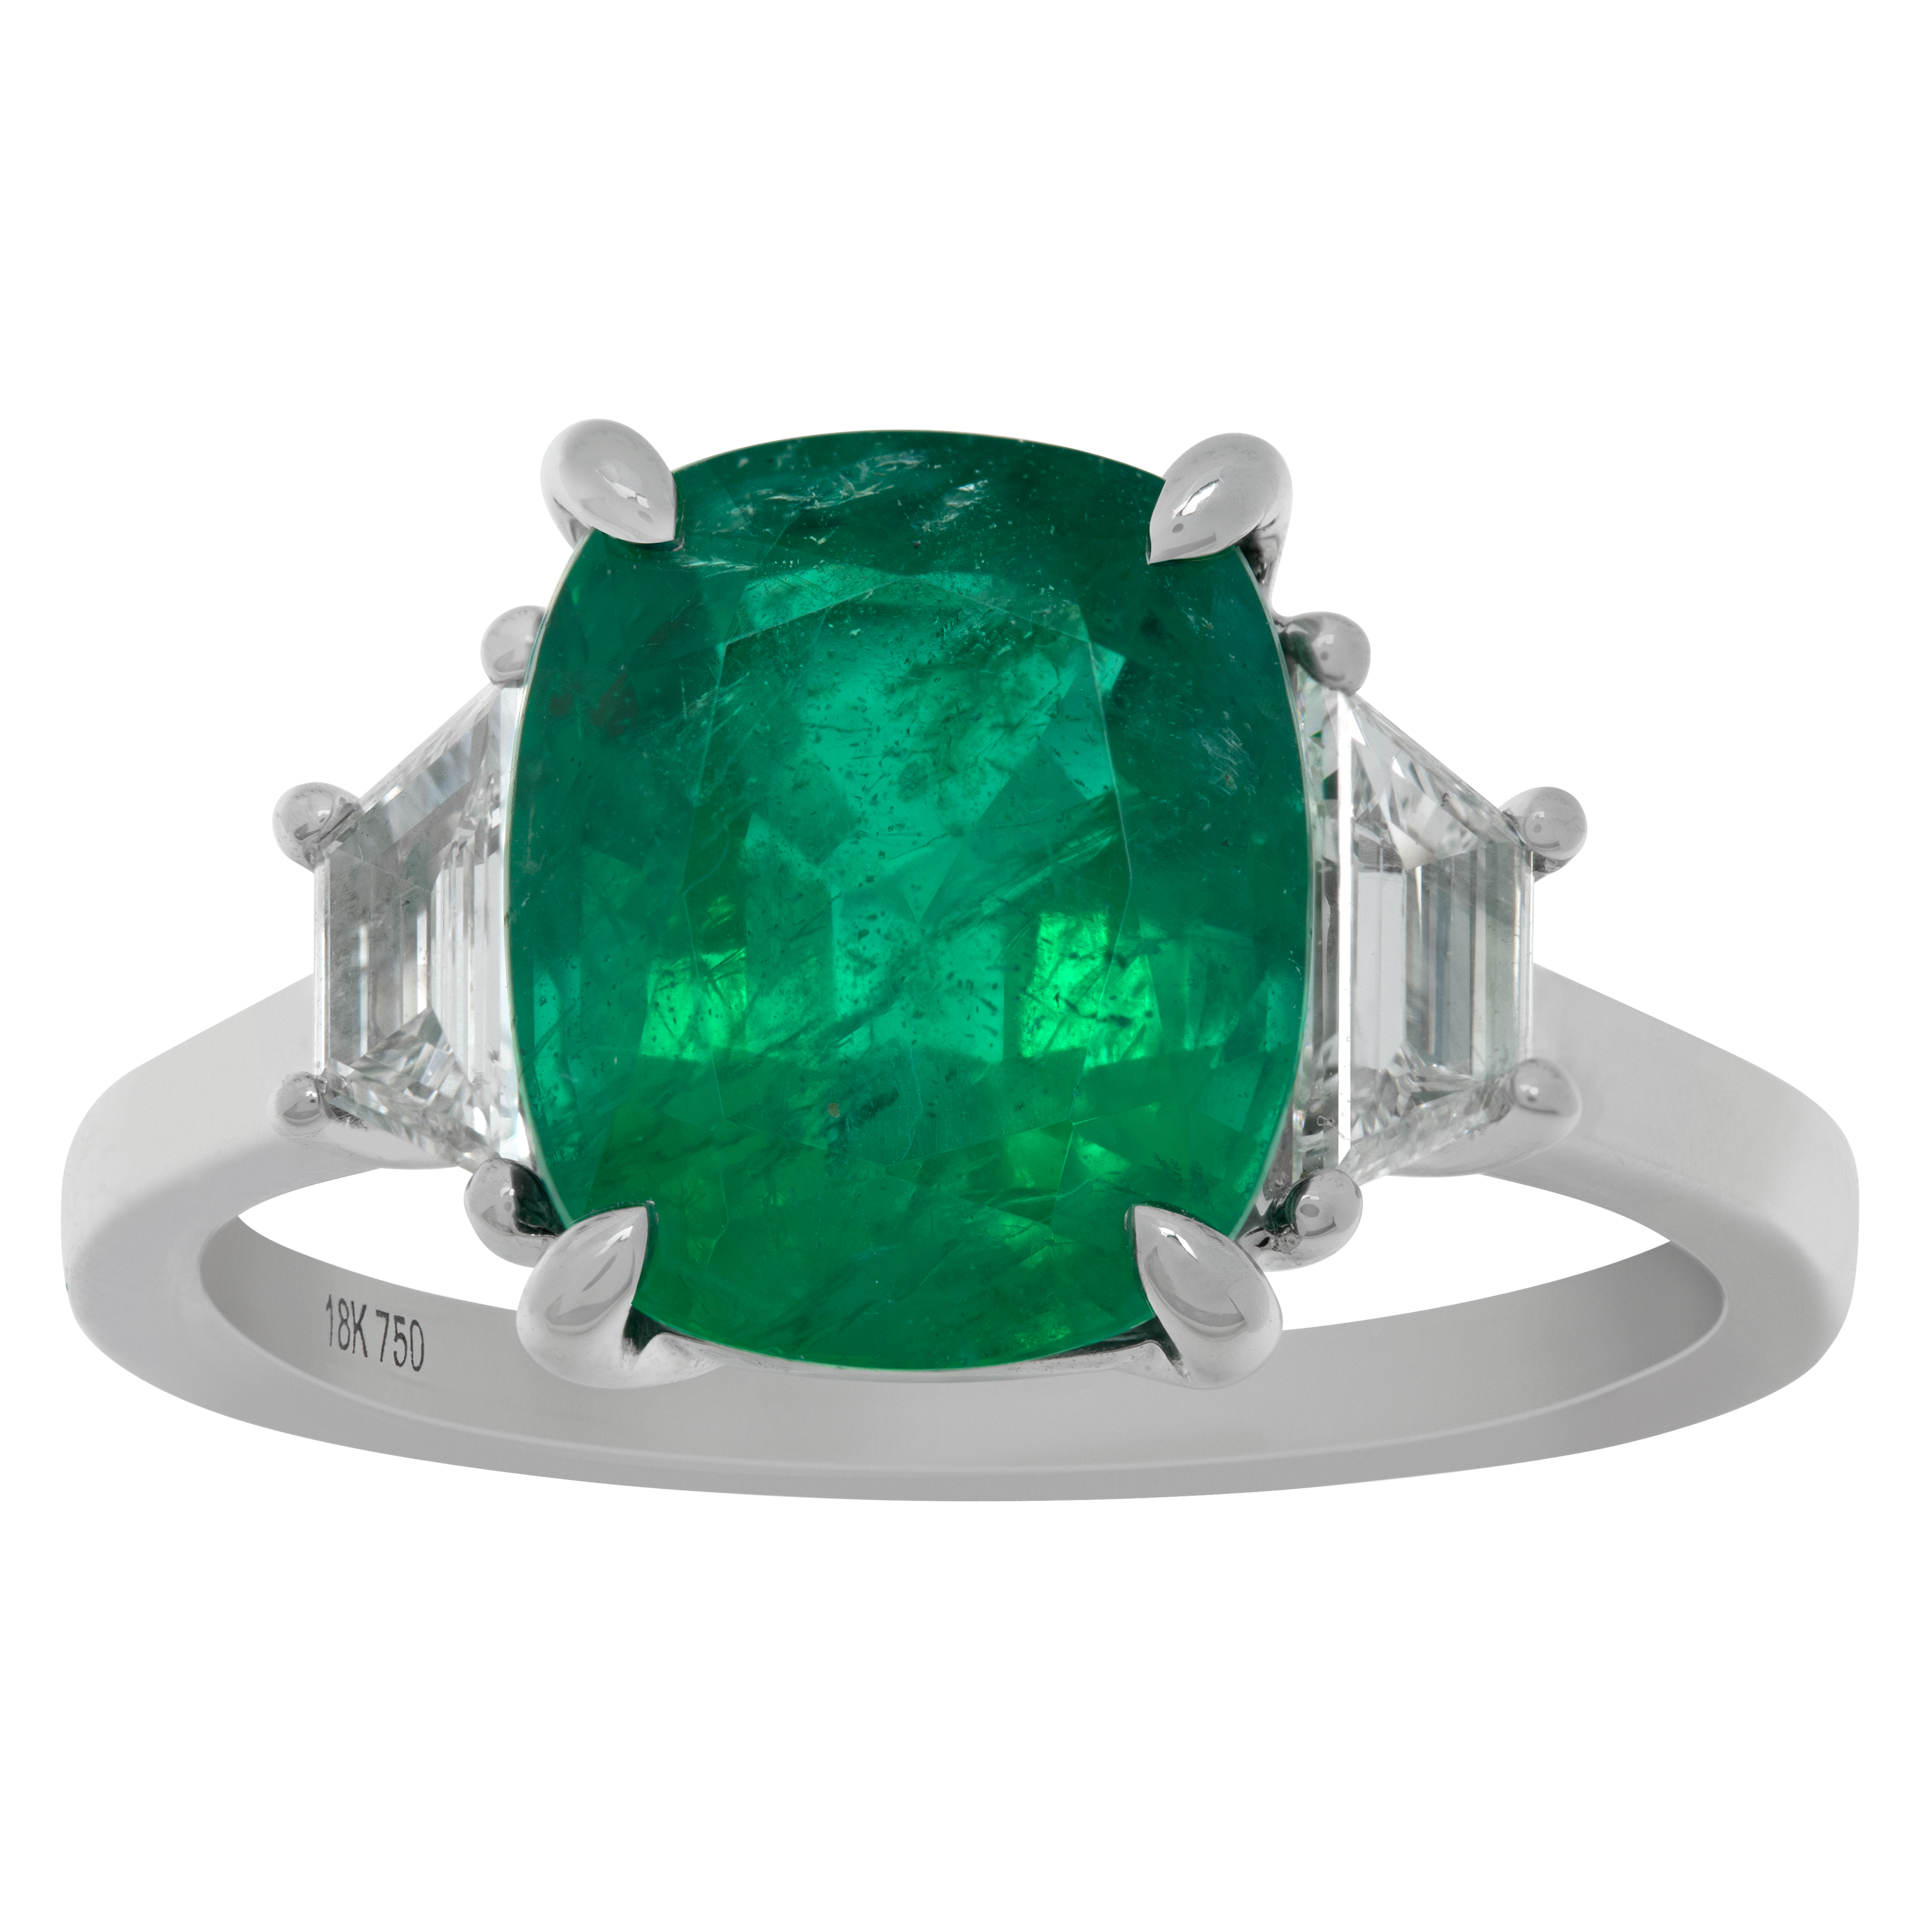 GIA certified 4.11 carat natural beryl cushion cut emerald ring (Stones)